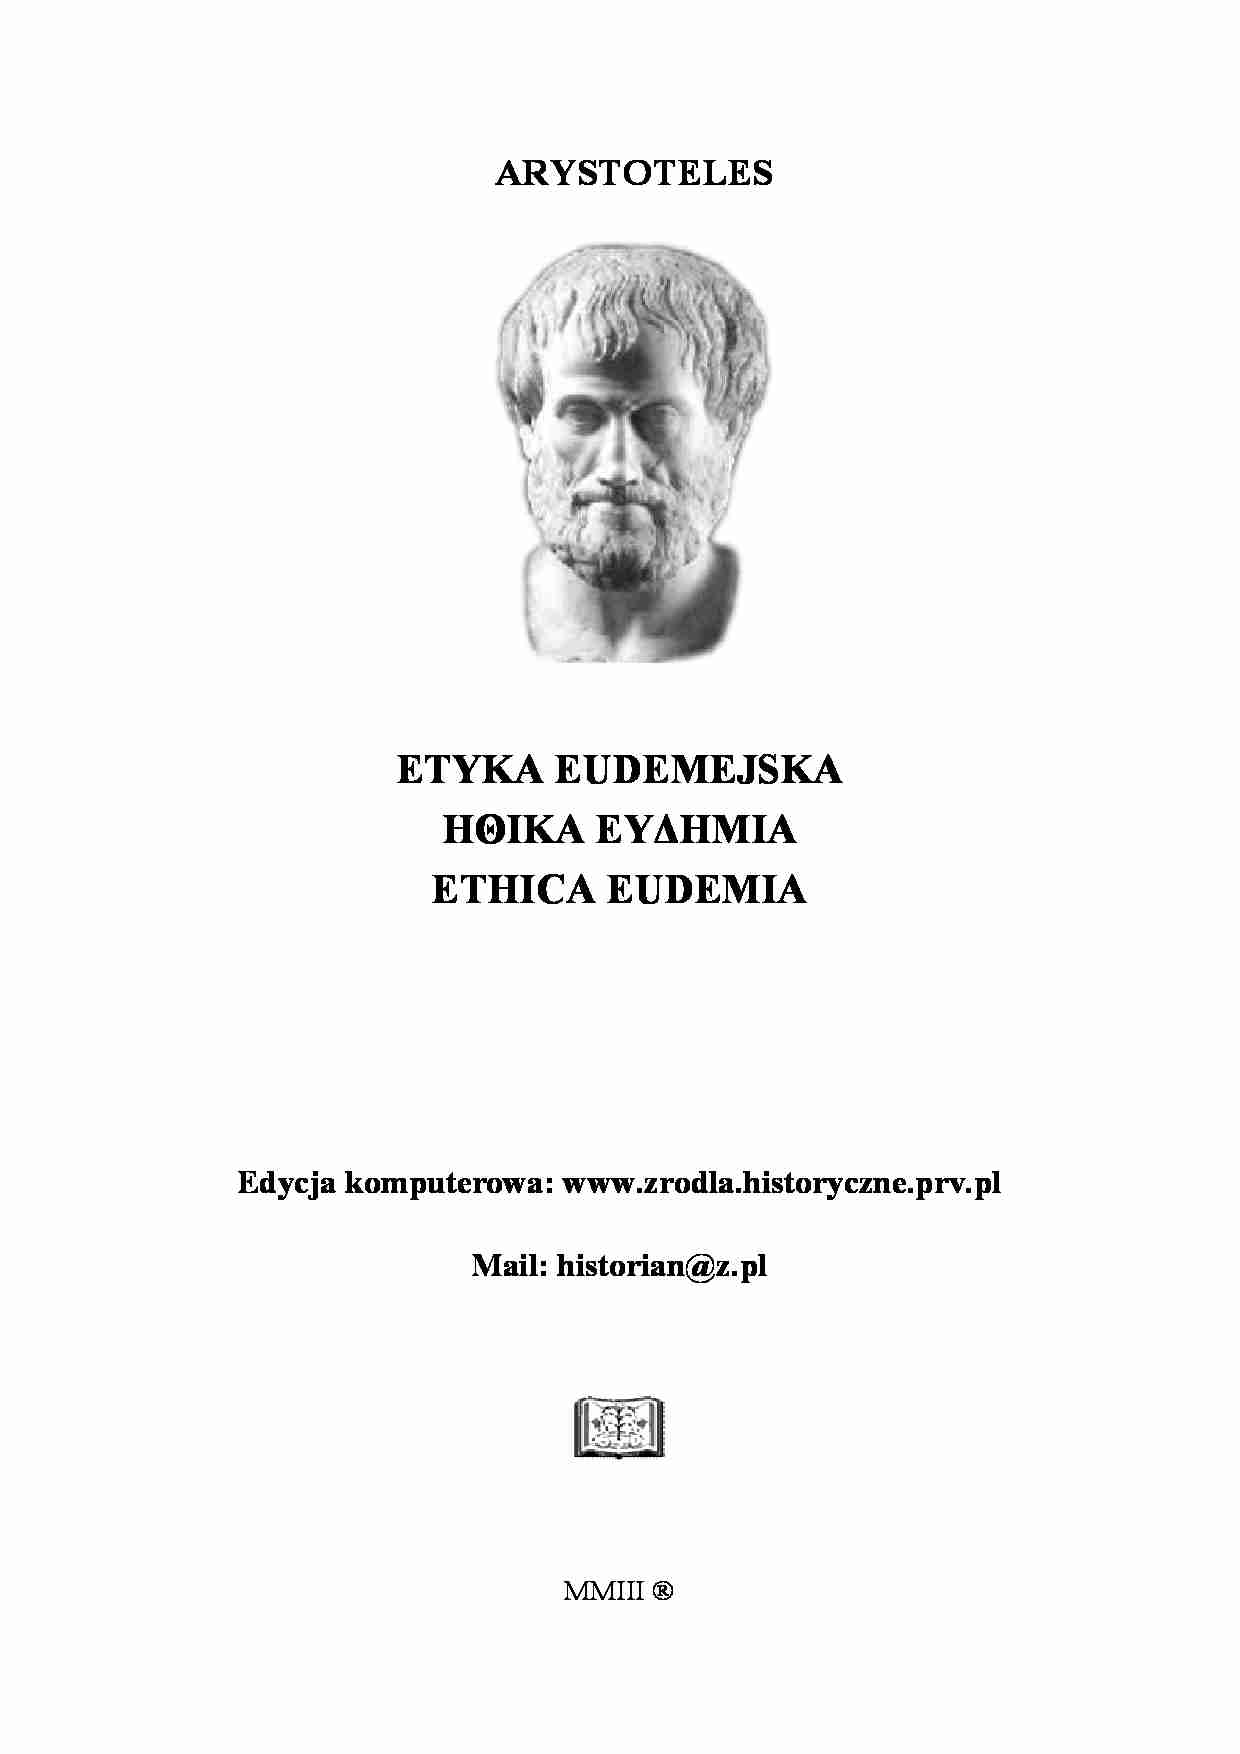 Arystoteles - Etyka Eudemejska - strona 1